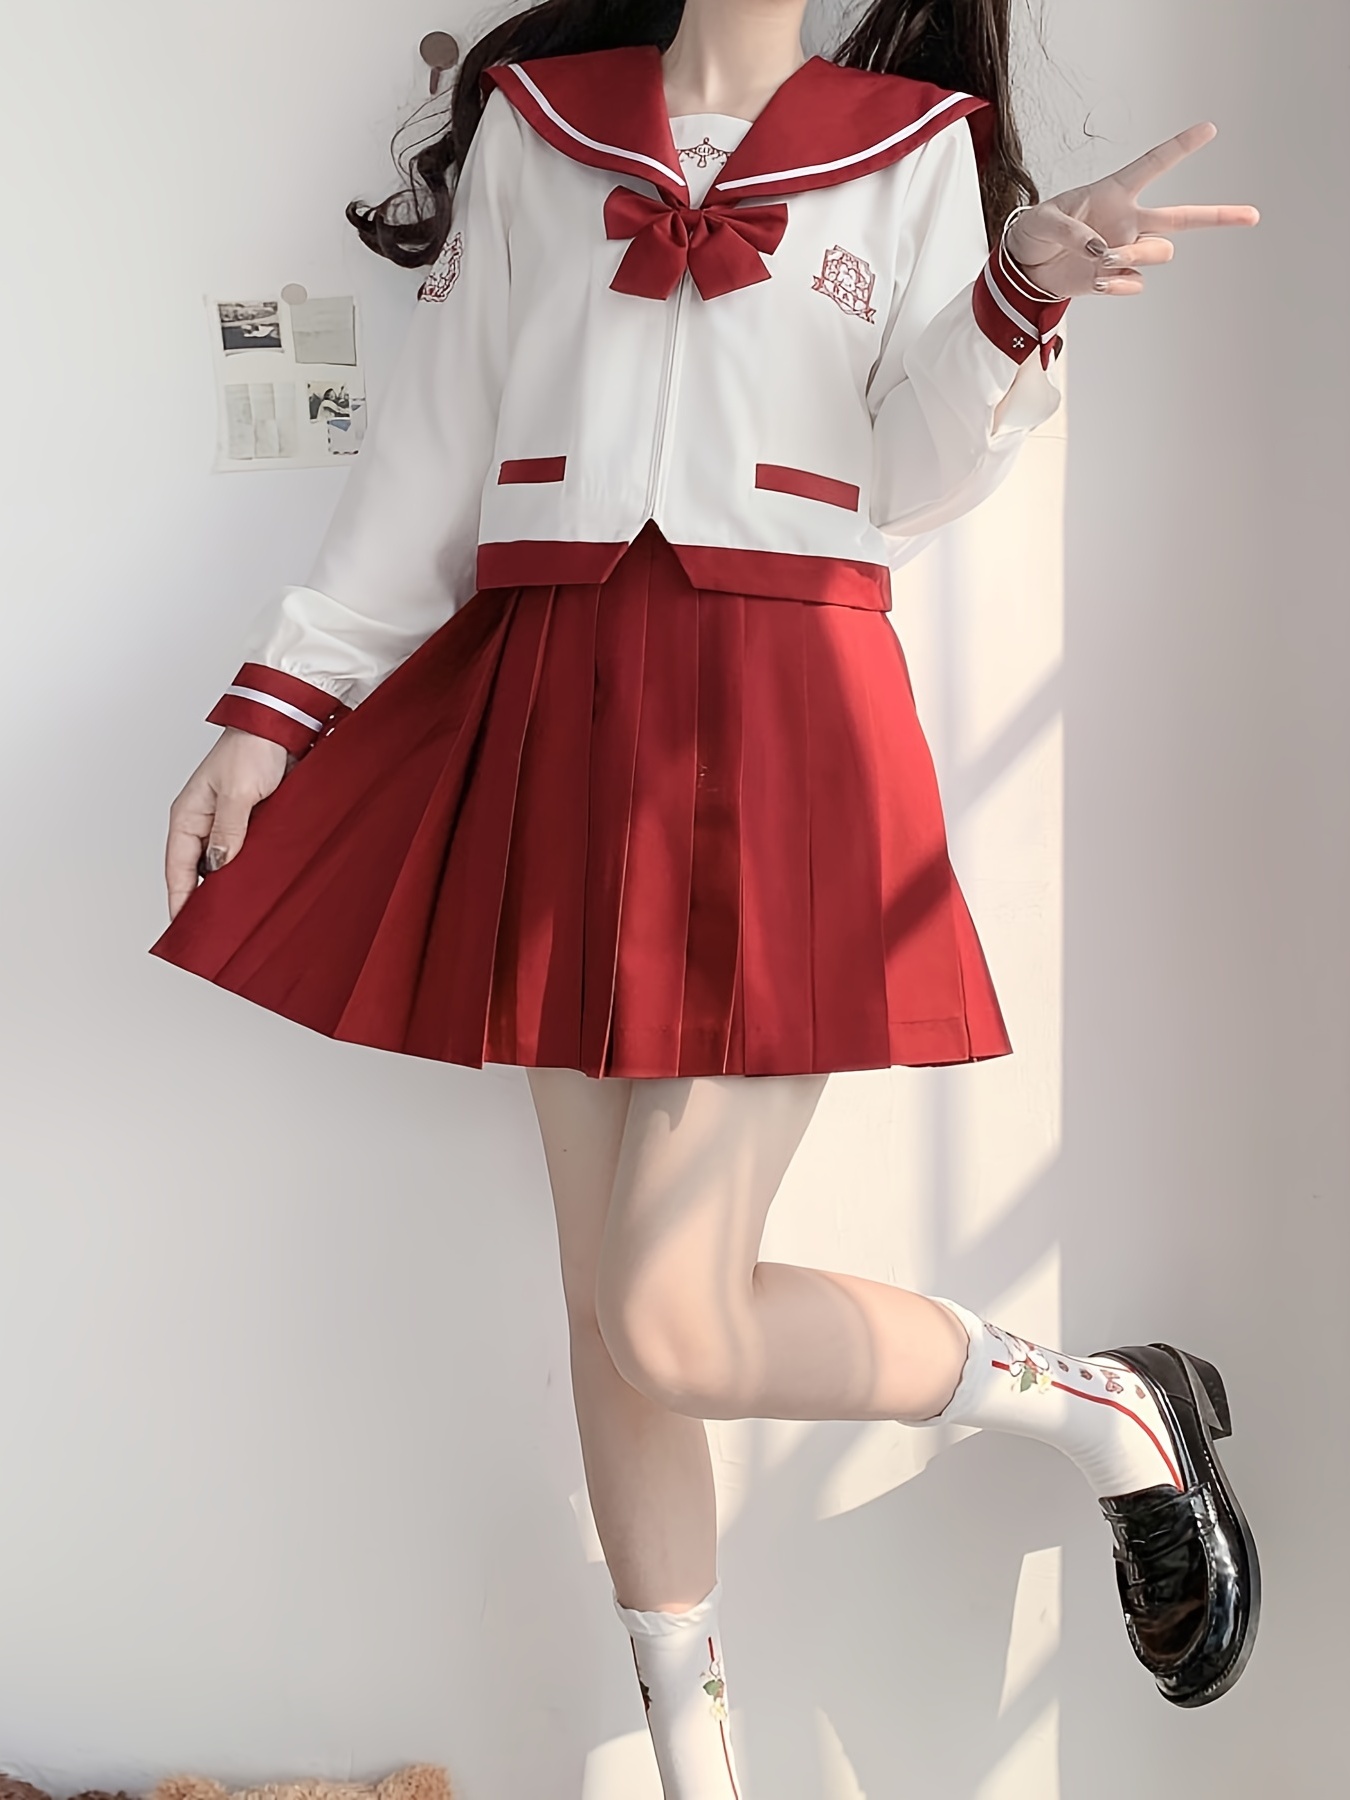 GIRLS WOMEN JAPANESE College School Uniform Short JK Sailor Solid